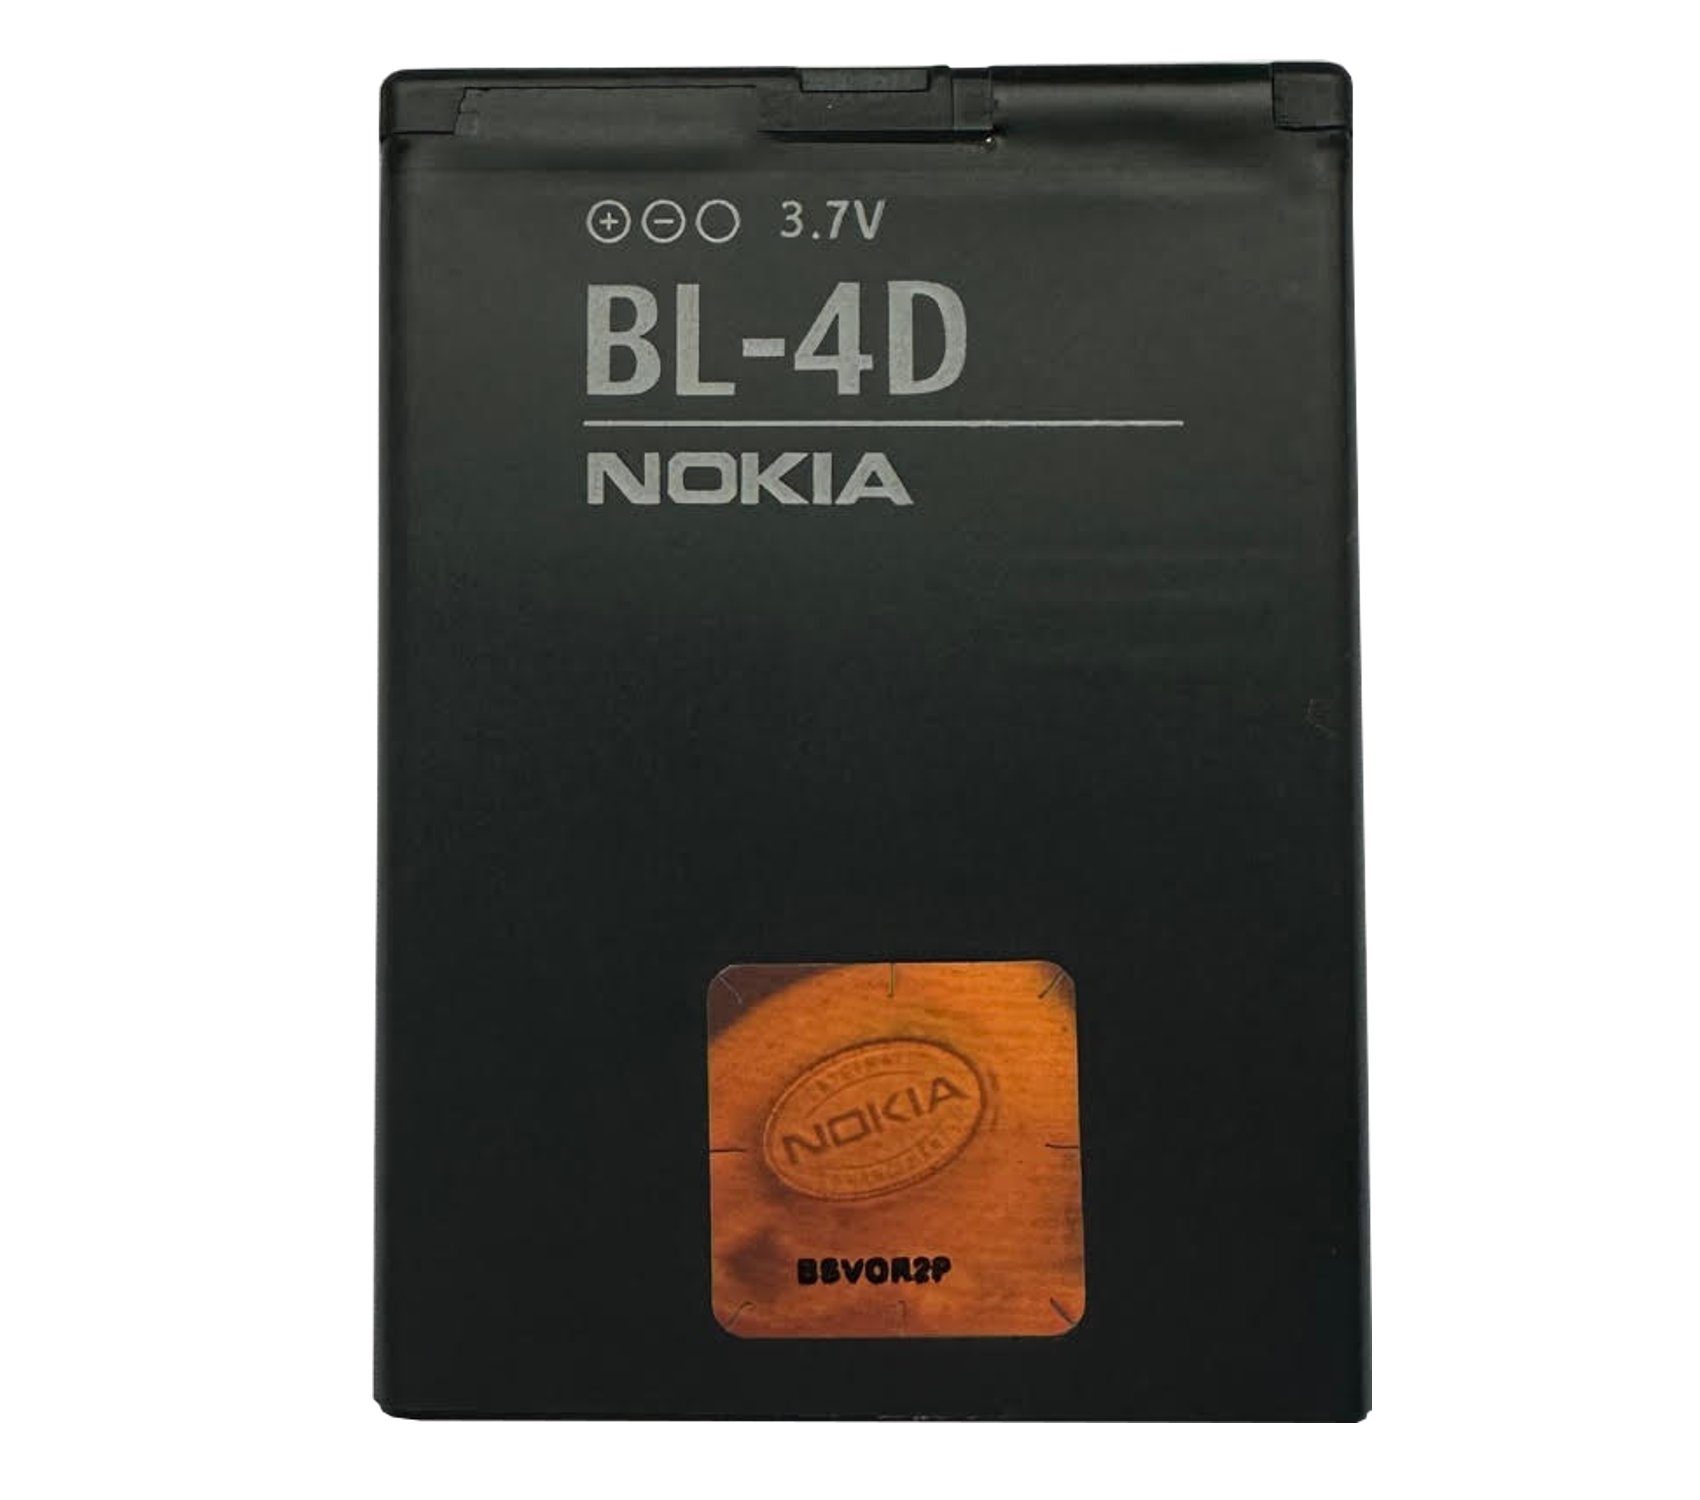 Nokia Original Nokia BL-4D Akku 1200 mAh Nokia E5 E7-00 N8 N97 Handy-Akku Nokia BL-4D 1200 mAh (3,7 V), Schnelles und effizientes Laden, Li-Ionen Zellen, Überladungsschutz